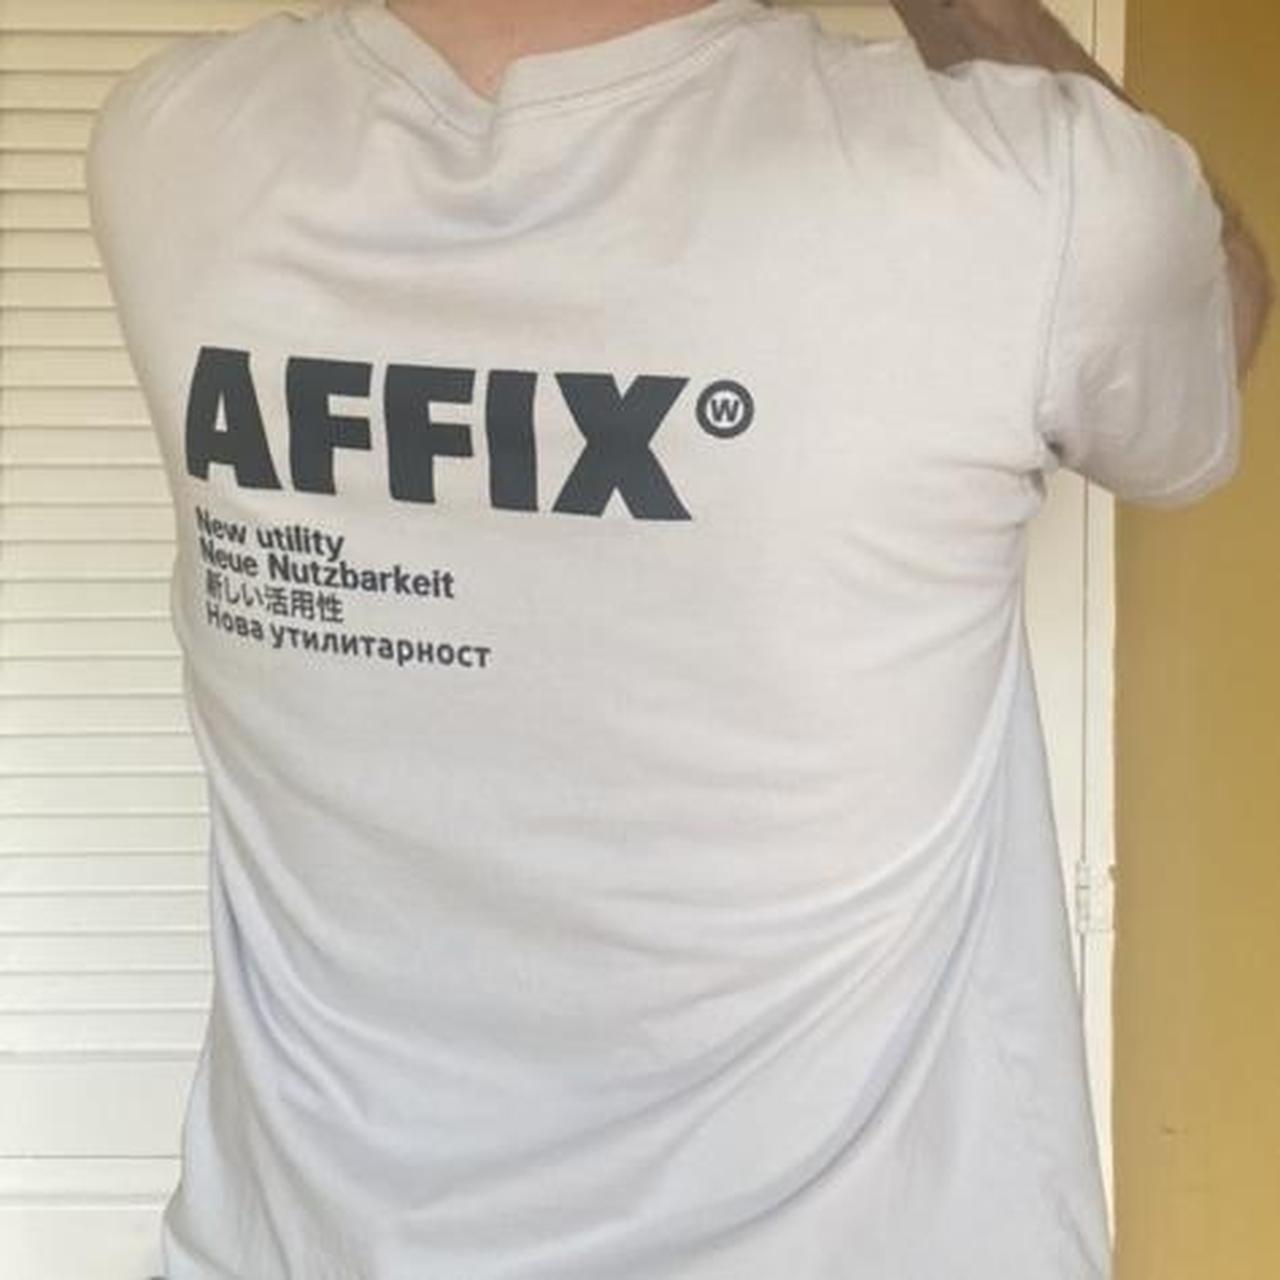 Affix Men's Grey and Black T-shirt (4)